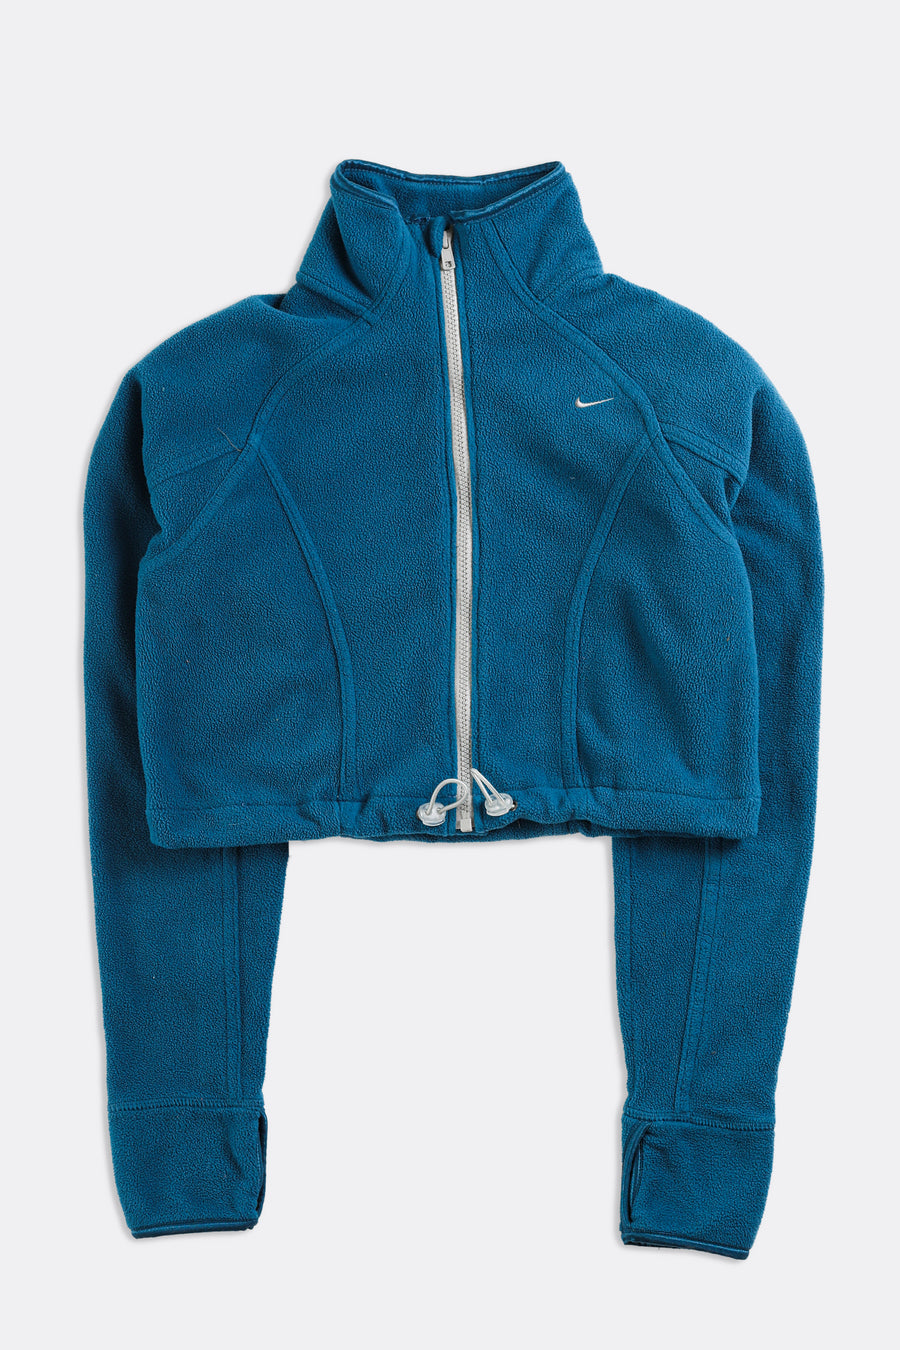 Rework Vintage Nike Cropped Fleece - XS